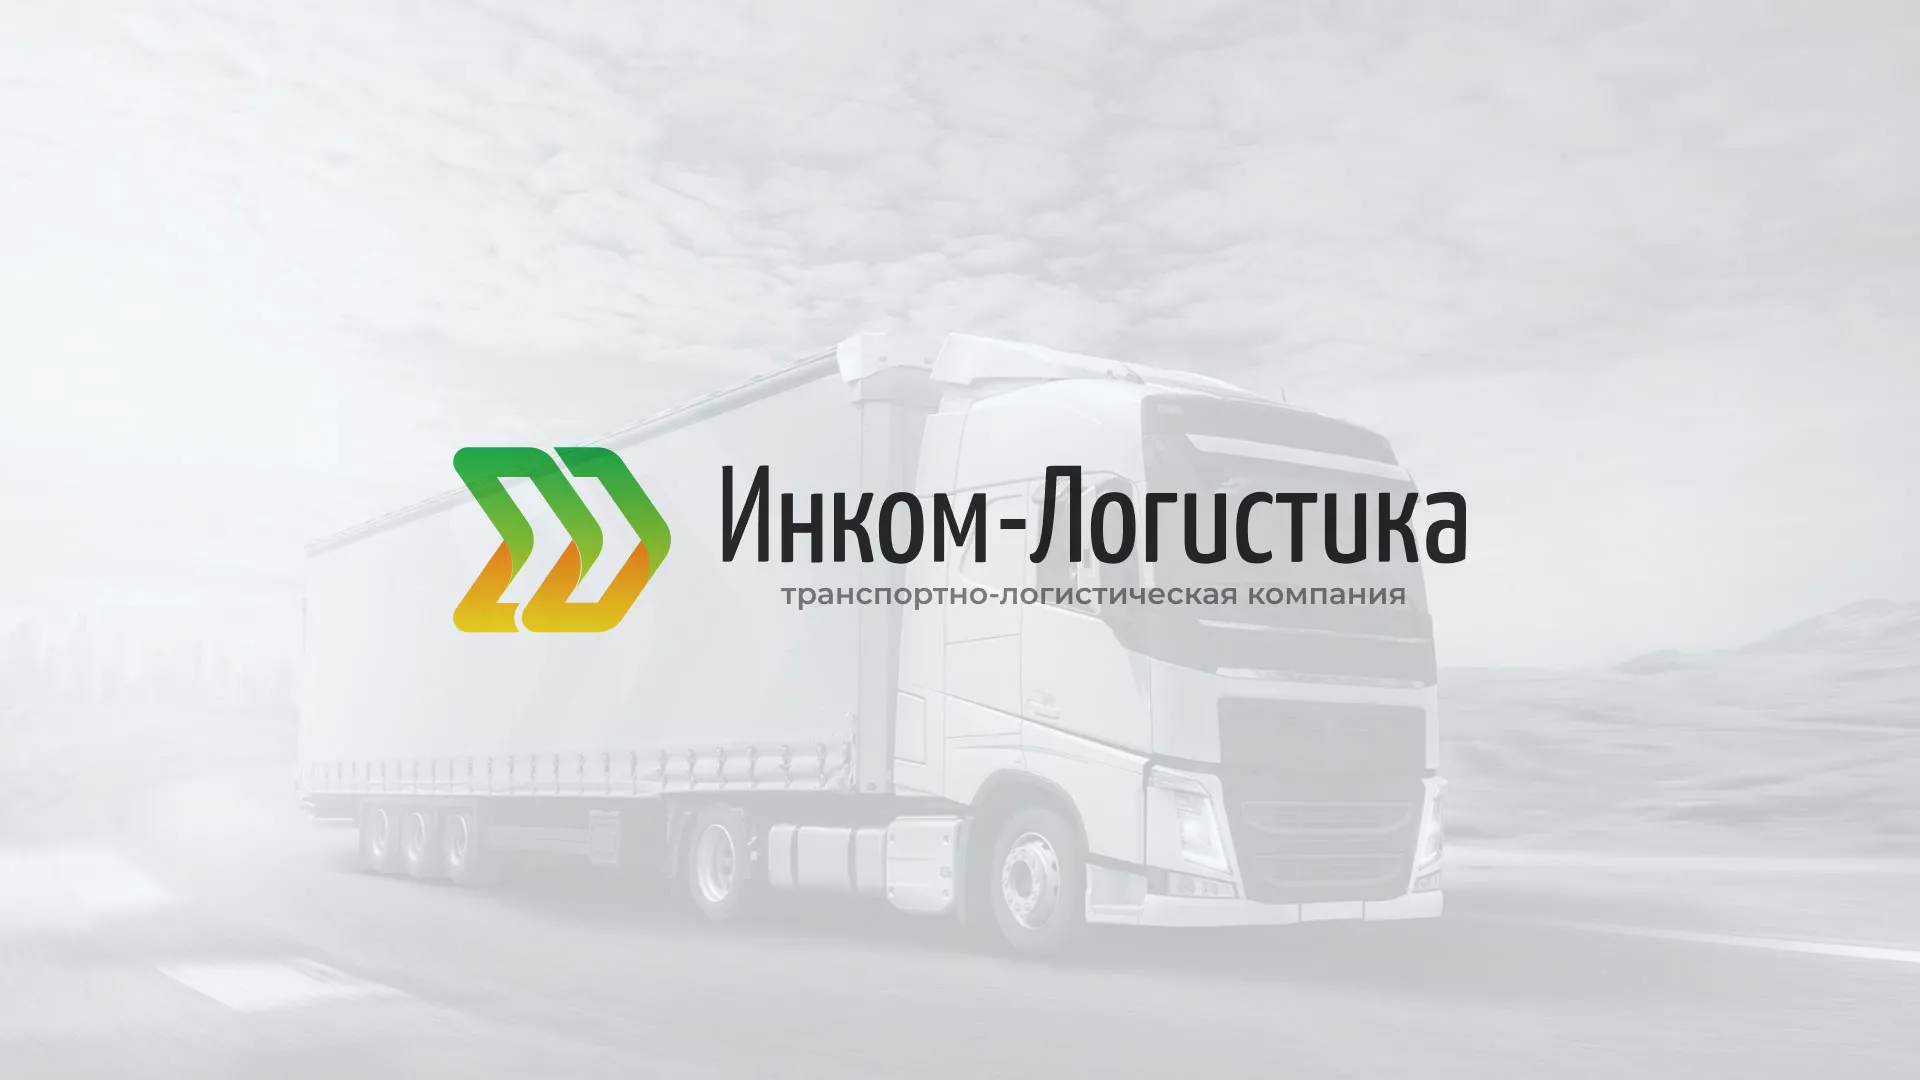 Разработка логотипа и сайта компании «Инком-Логистика» в Николаевске